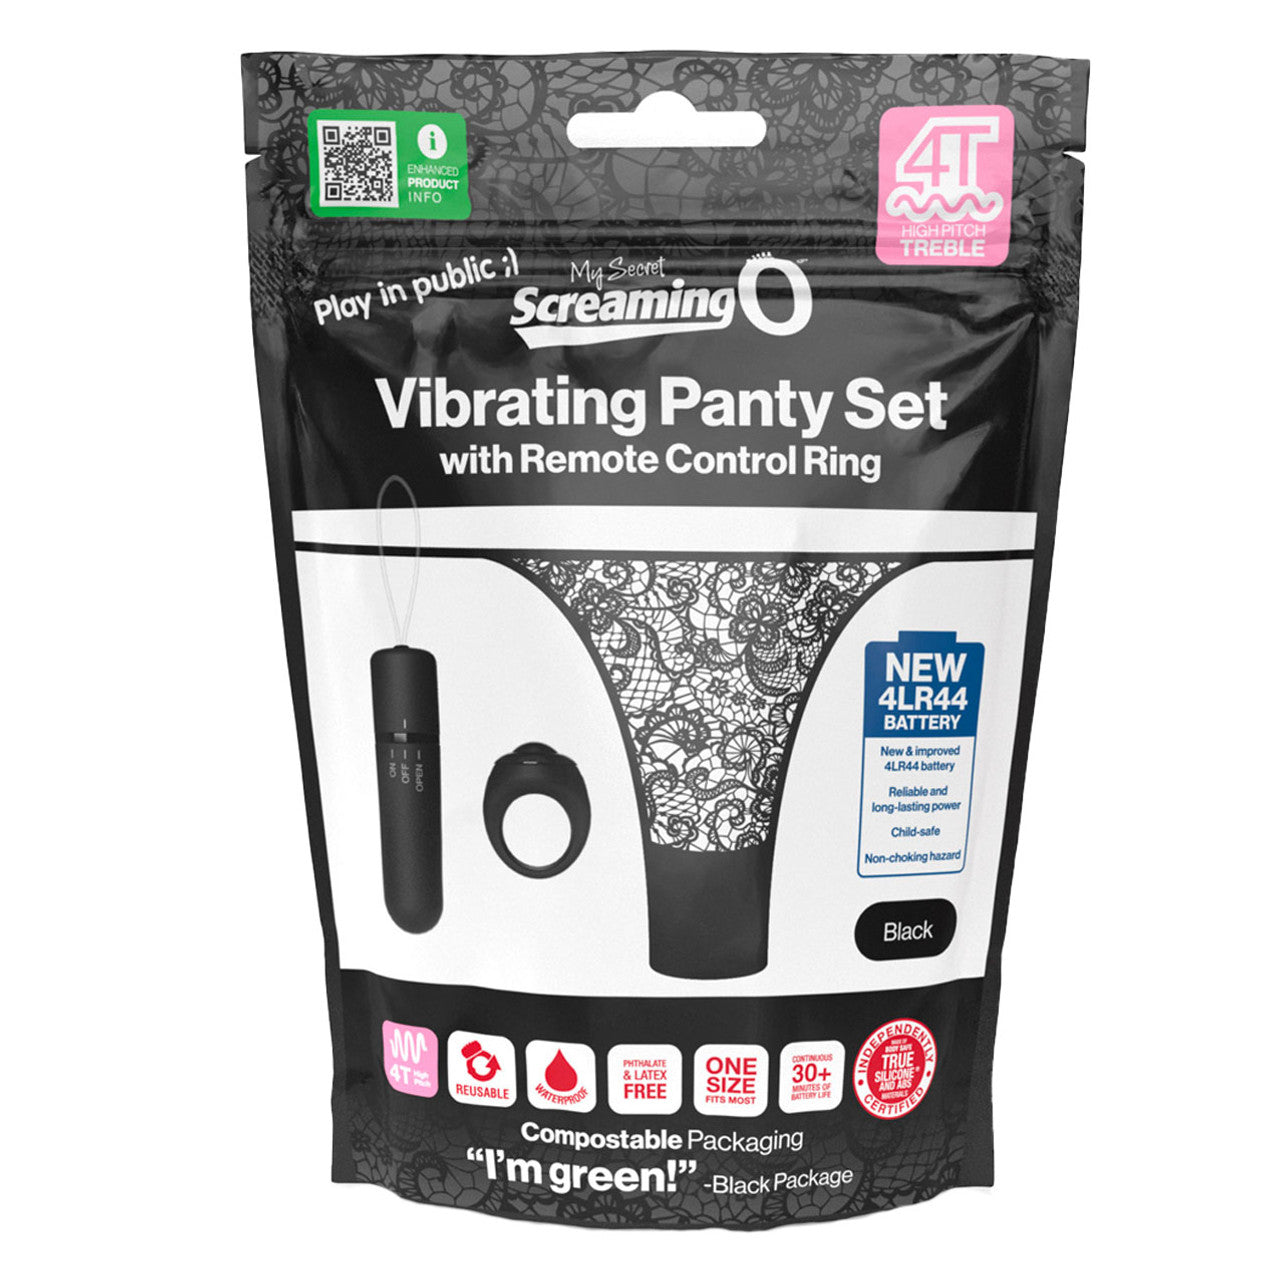 Vibrating Panty- My Secret Screaming O 4T